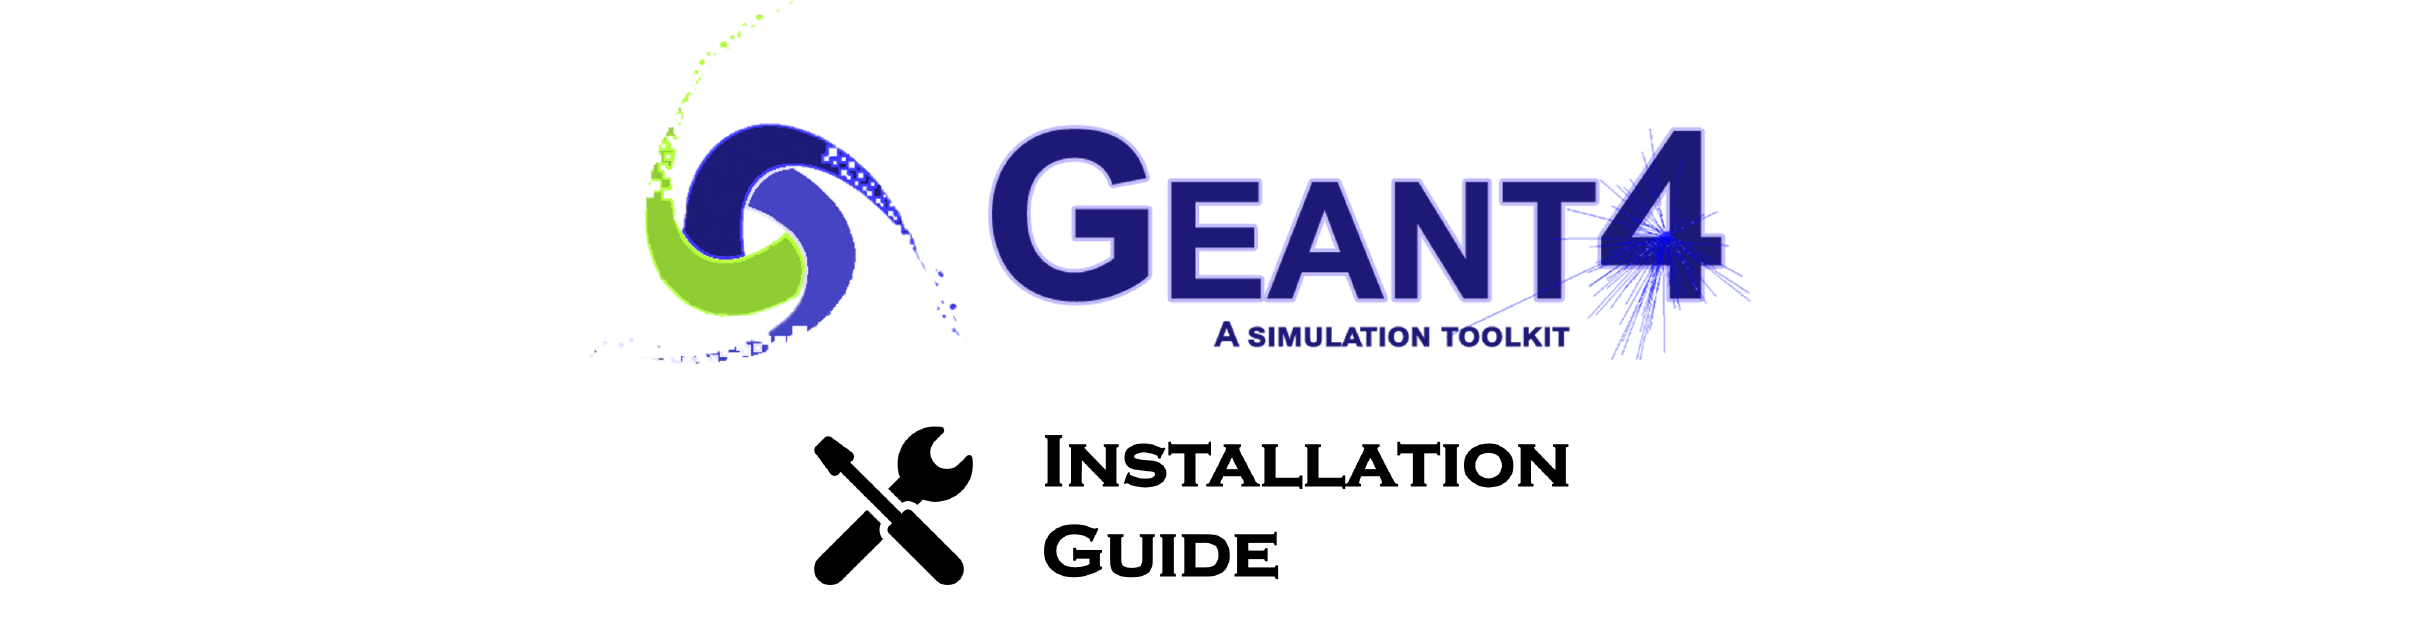 Geant4 설치 가이드 링크 모음